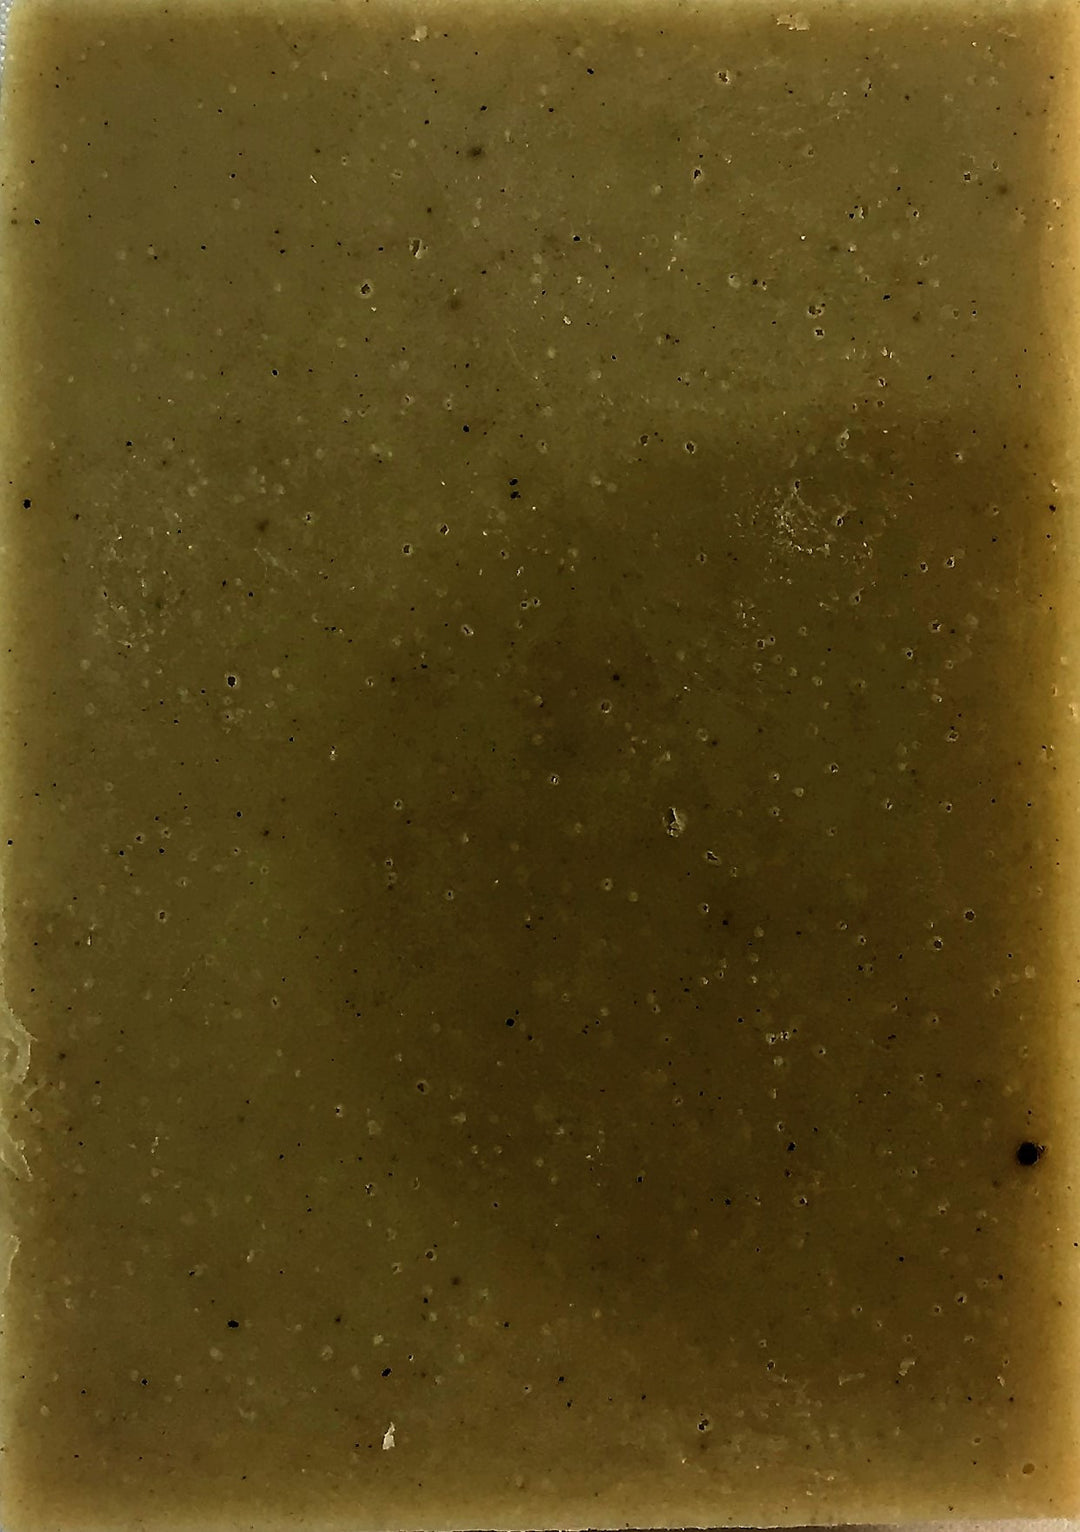 Lemon Myrtle Soap from Handmade Naturals